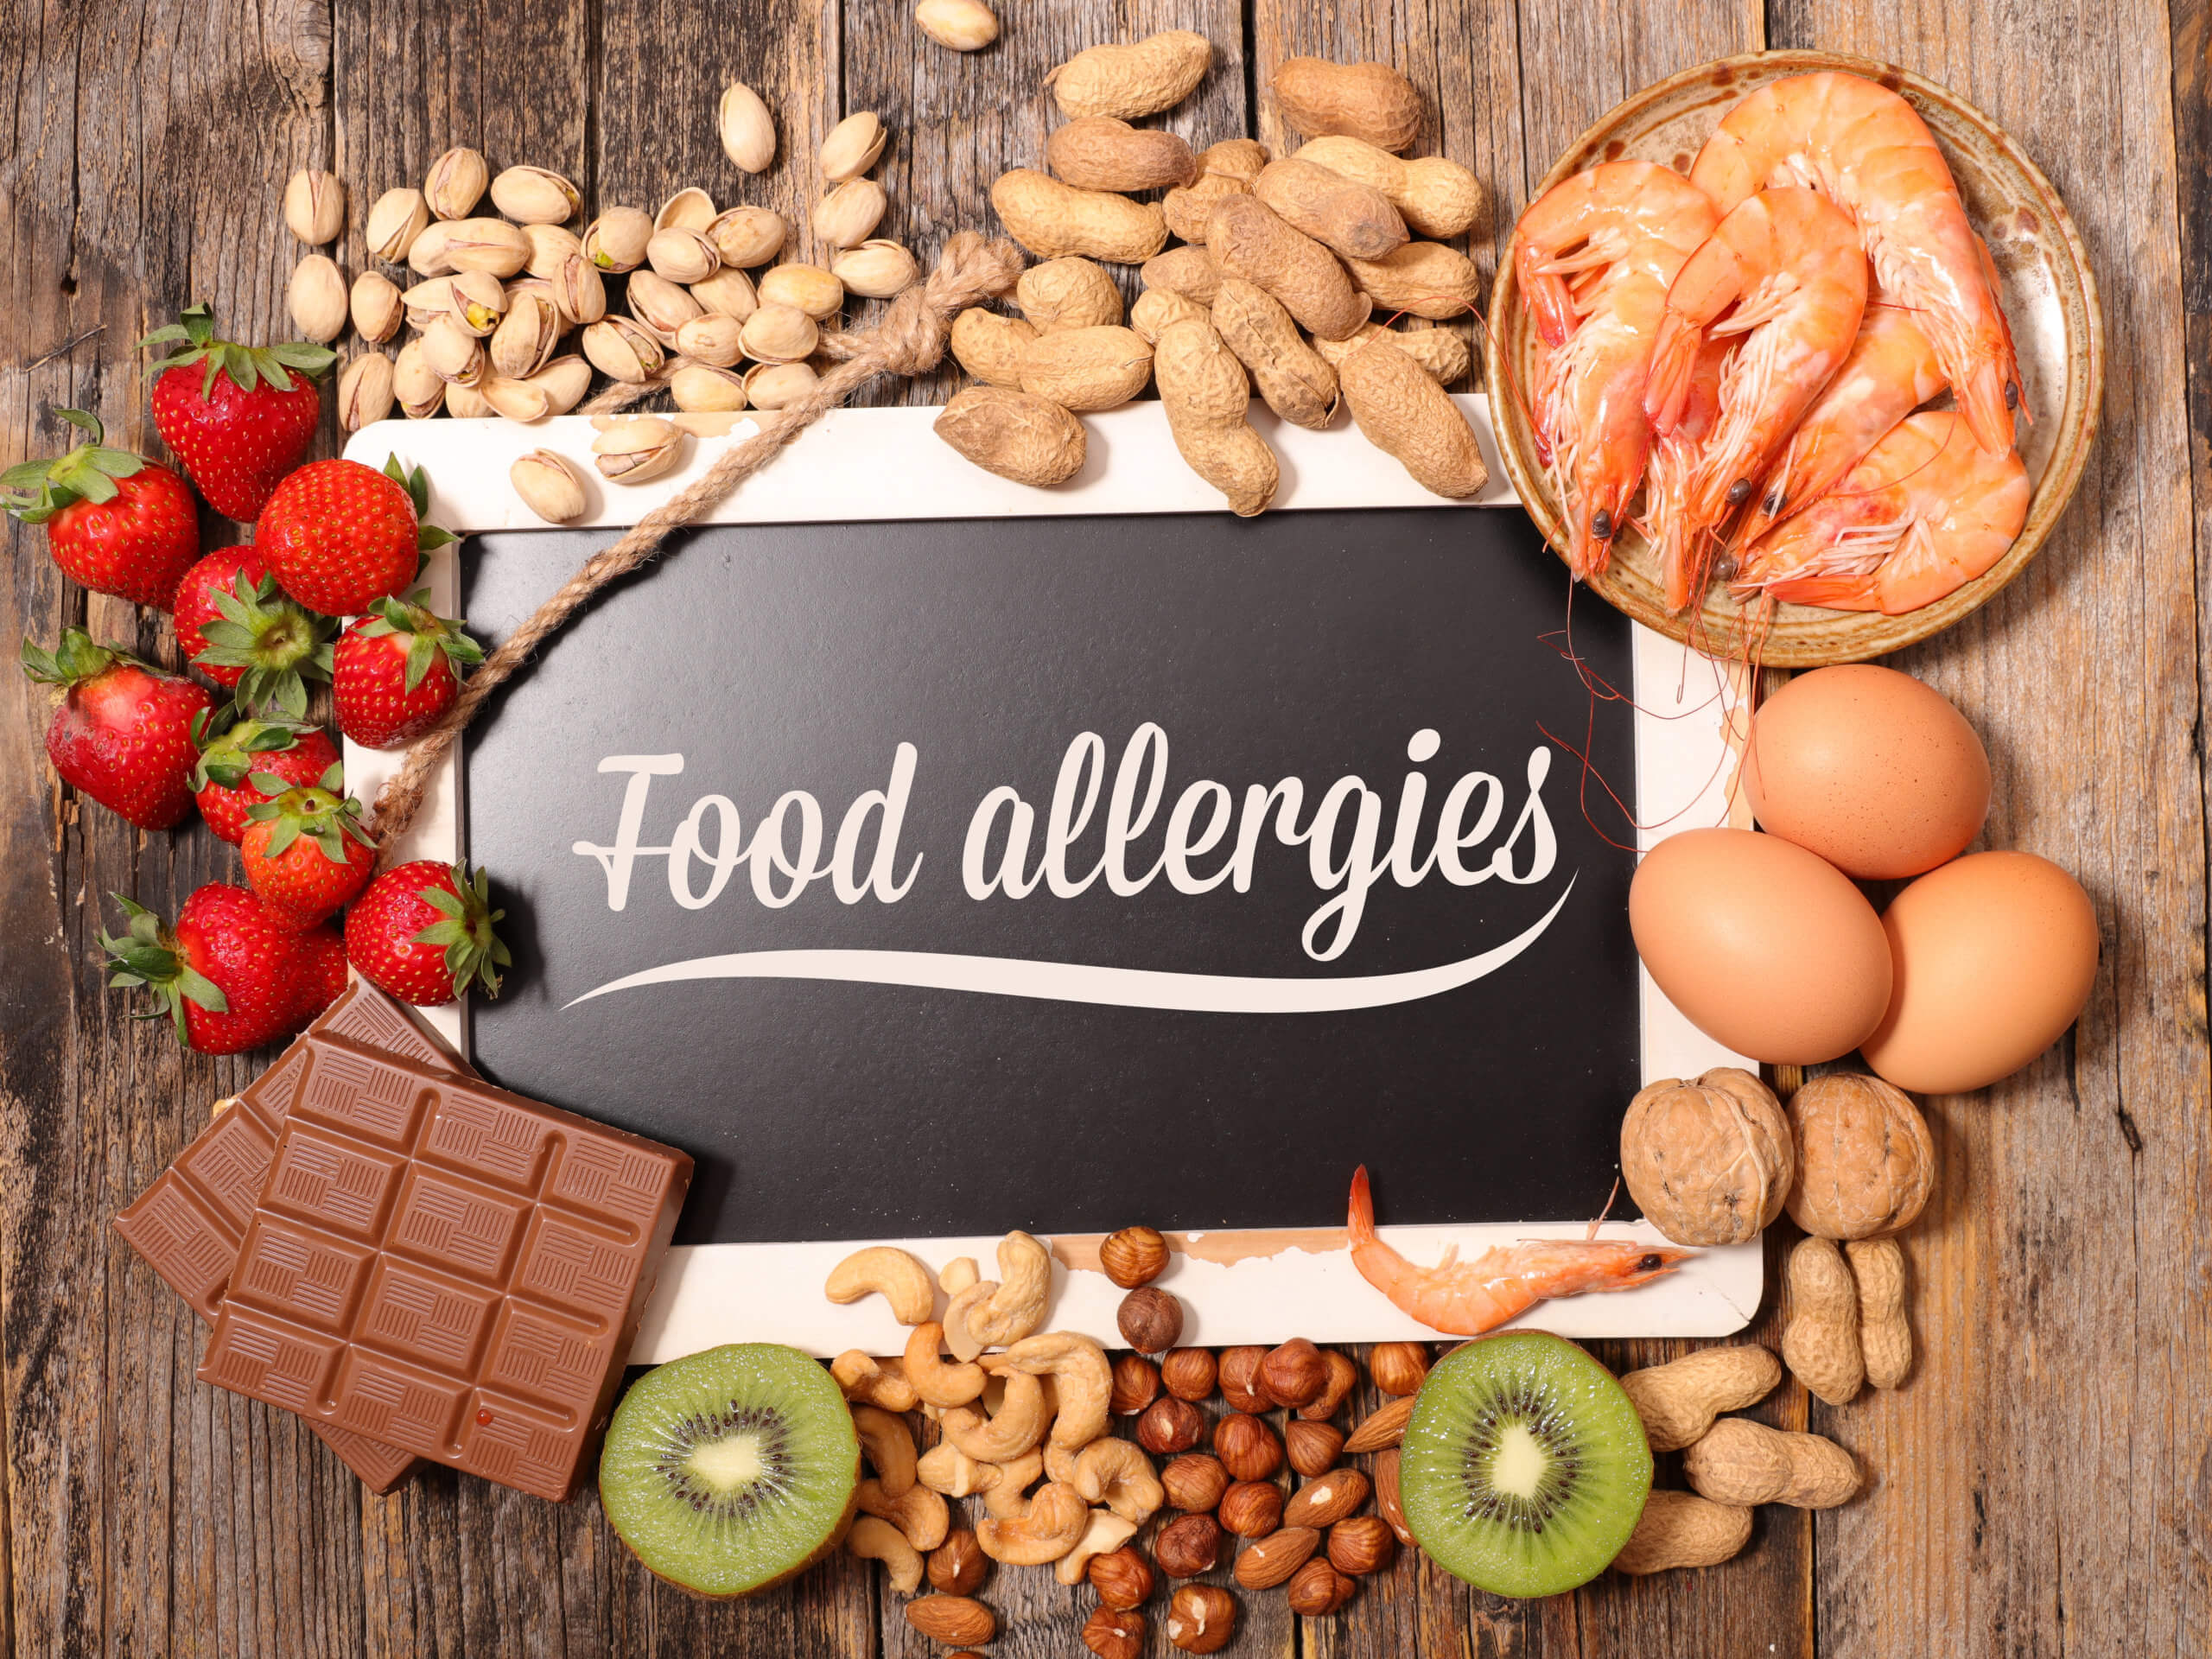 Food allergies sign